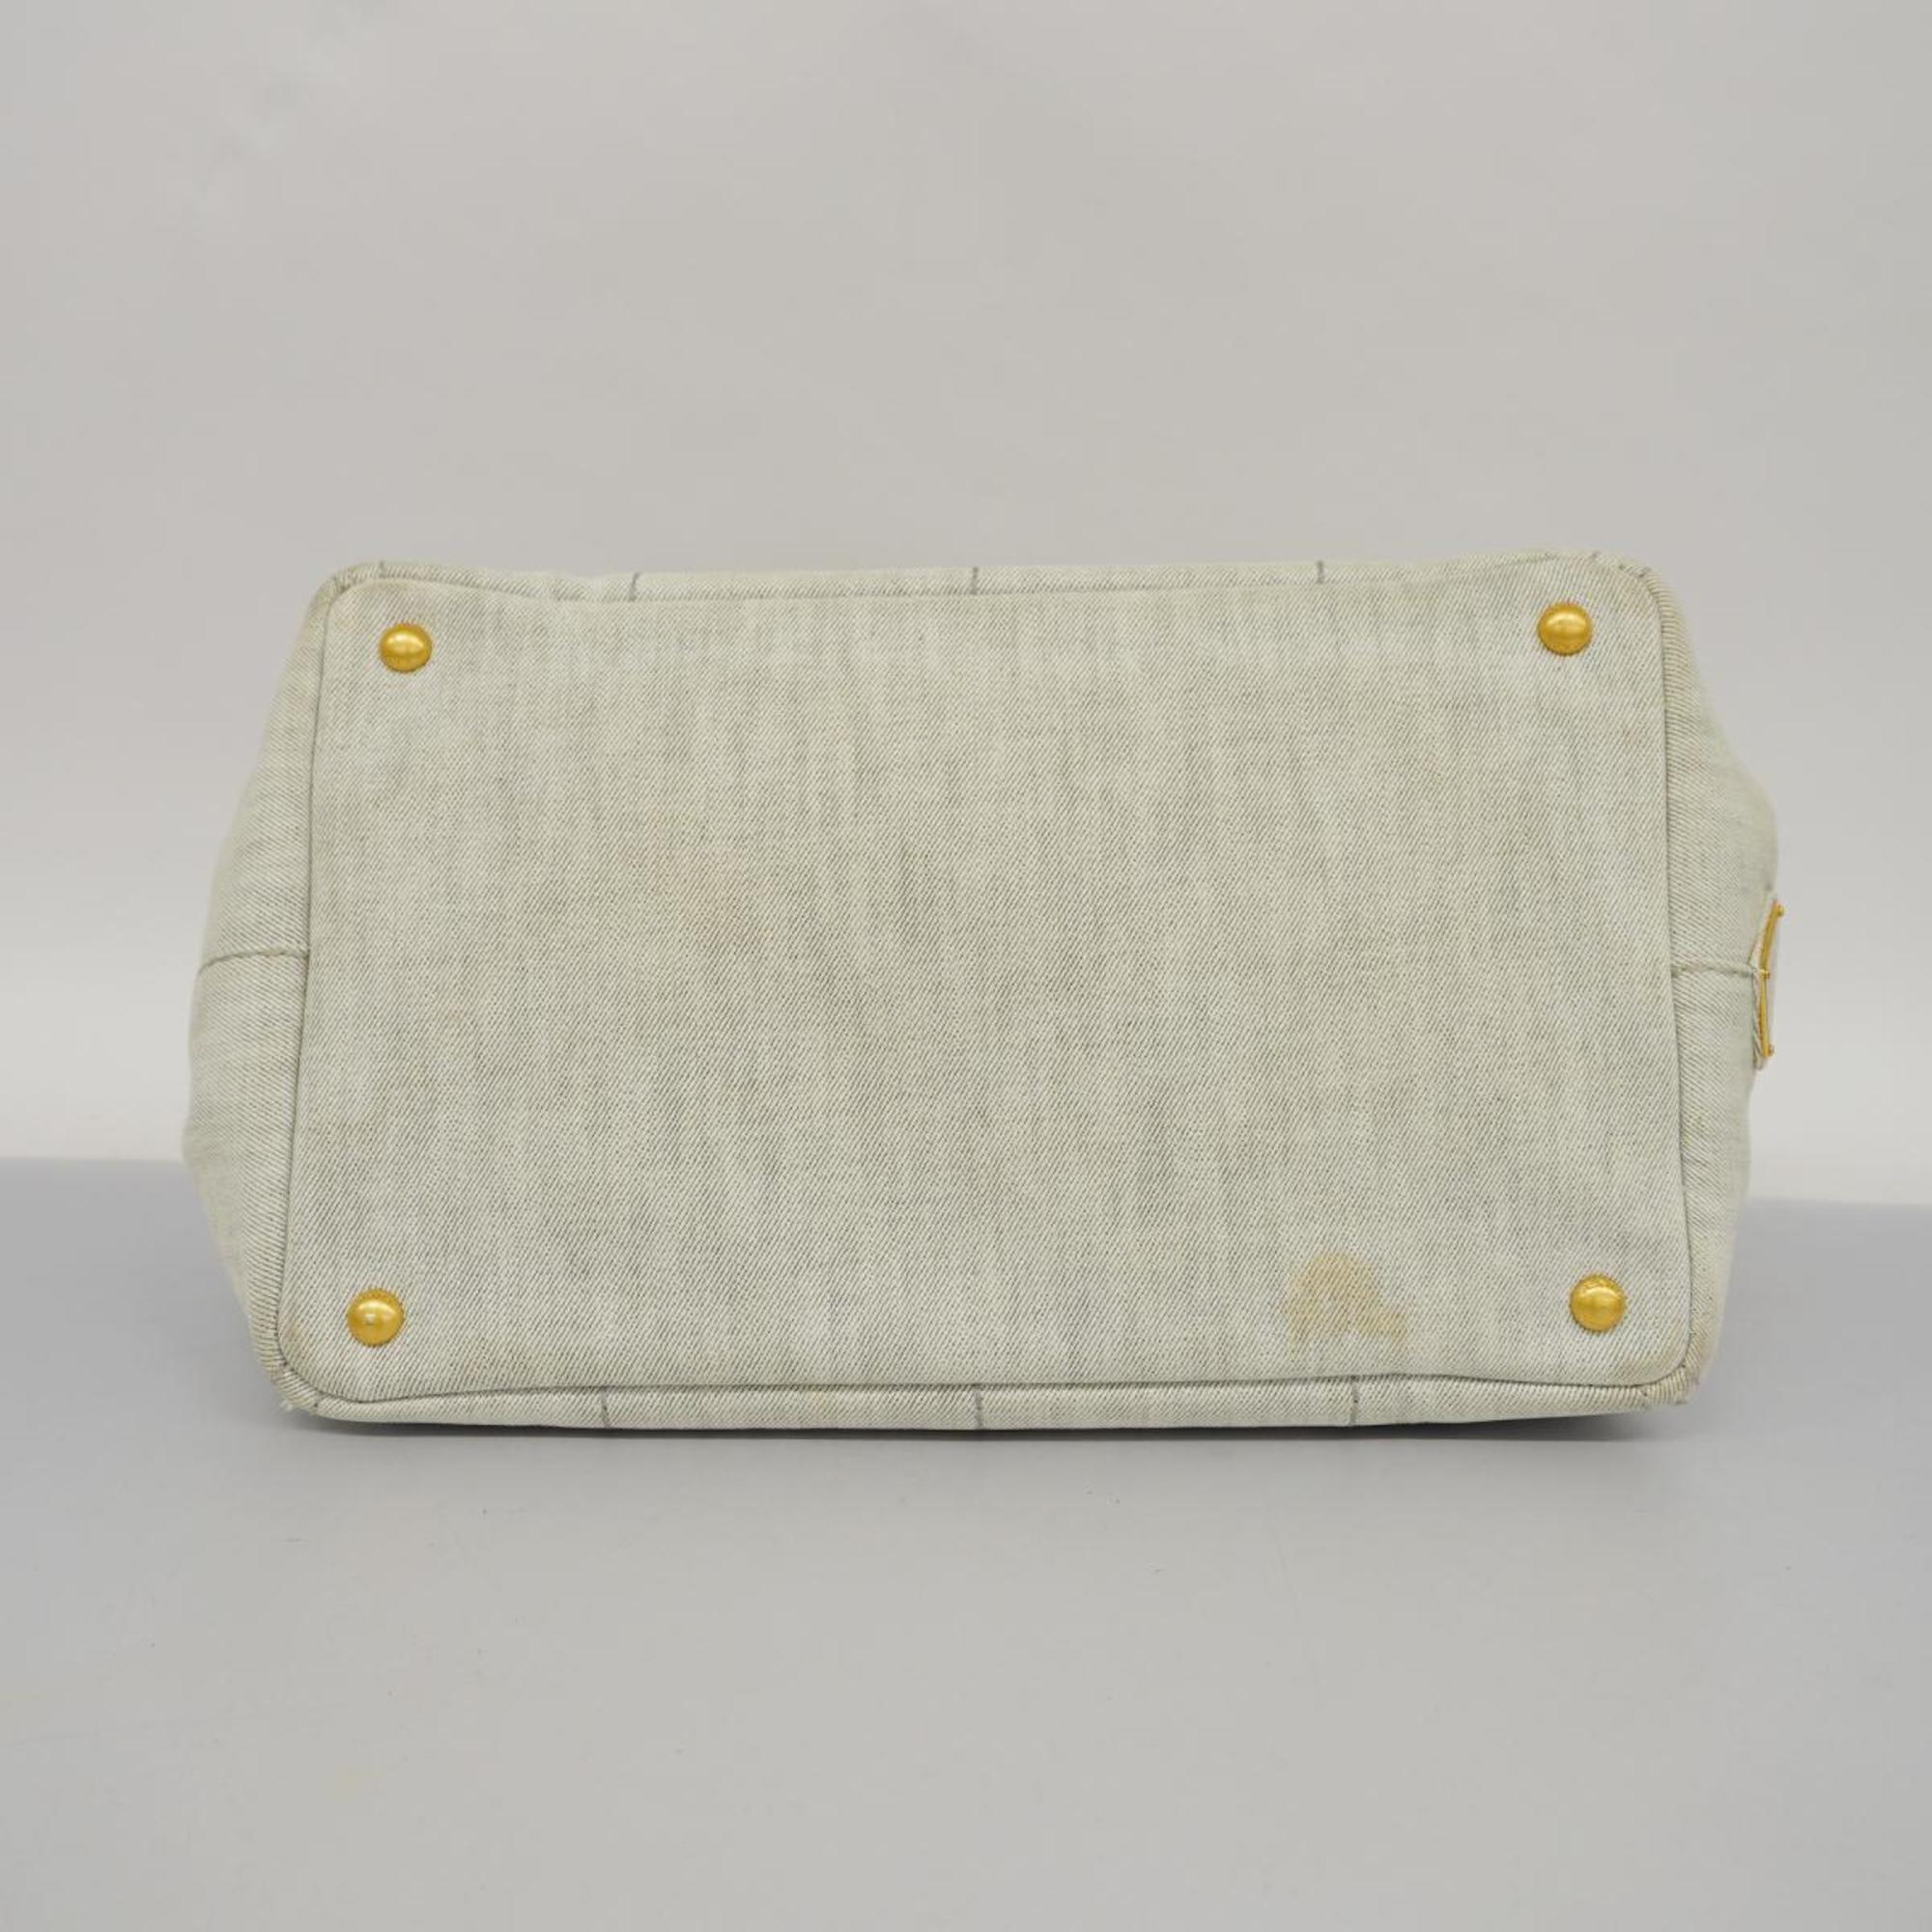 Prada handbag Canapa canvas white light grey ladies